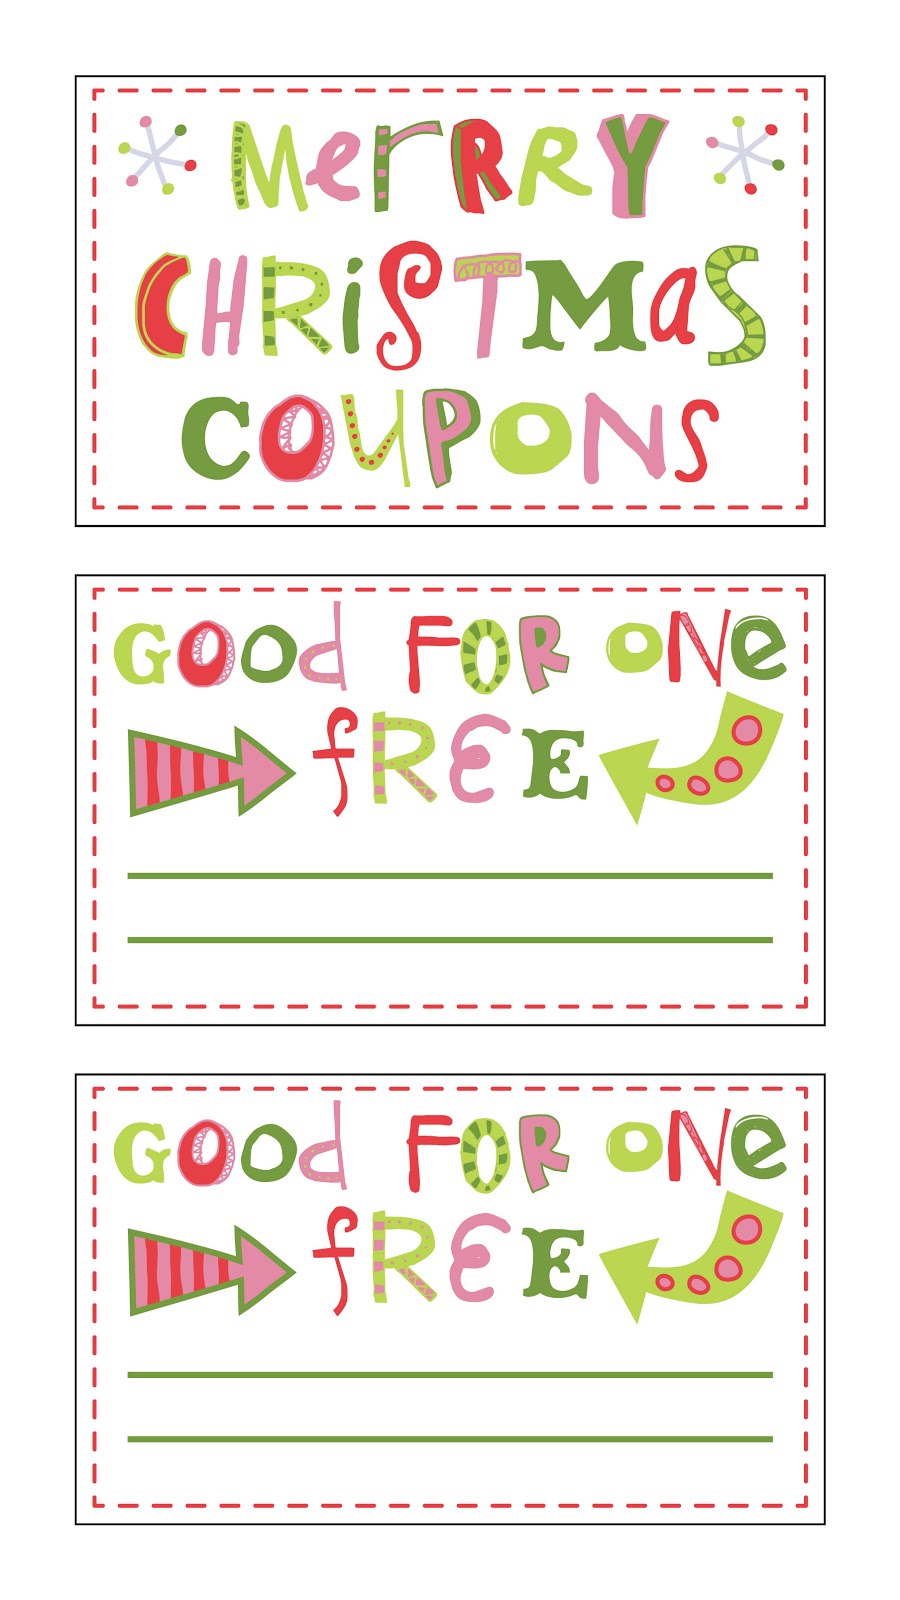 fontaholic-freebie-friday-christmas-coupons